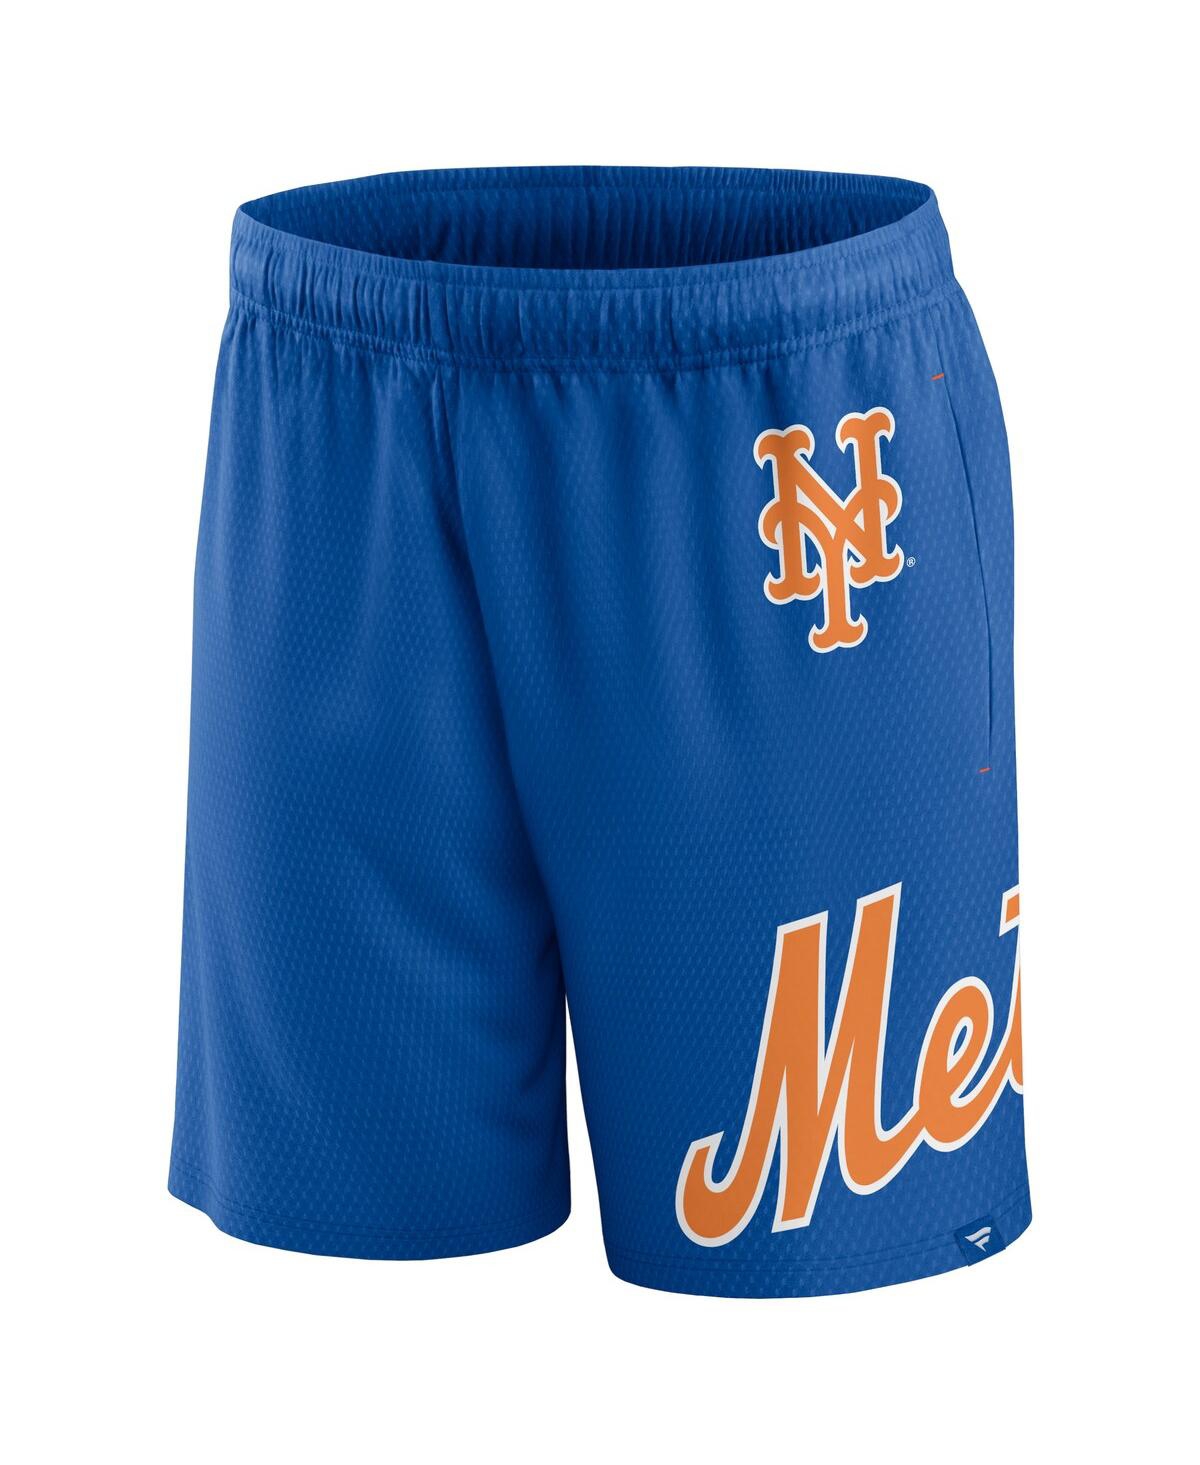 Shop Fanatics Men's  Royal New York Mets Clincher Mesh Shorts